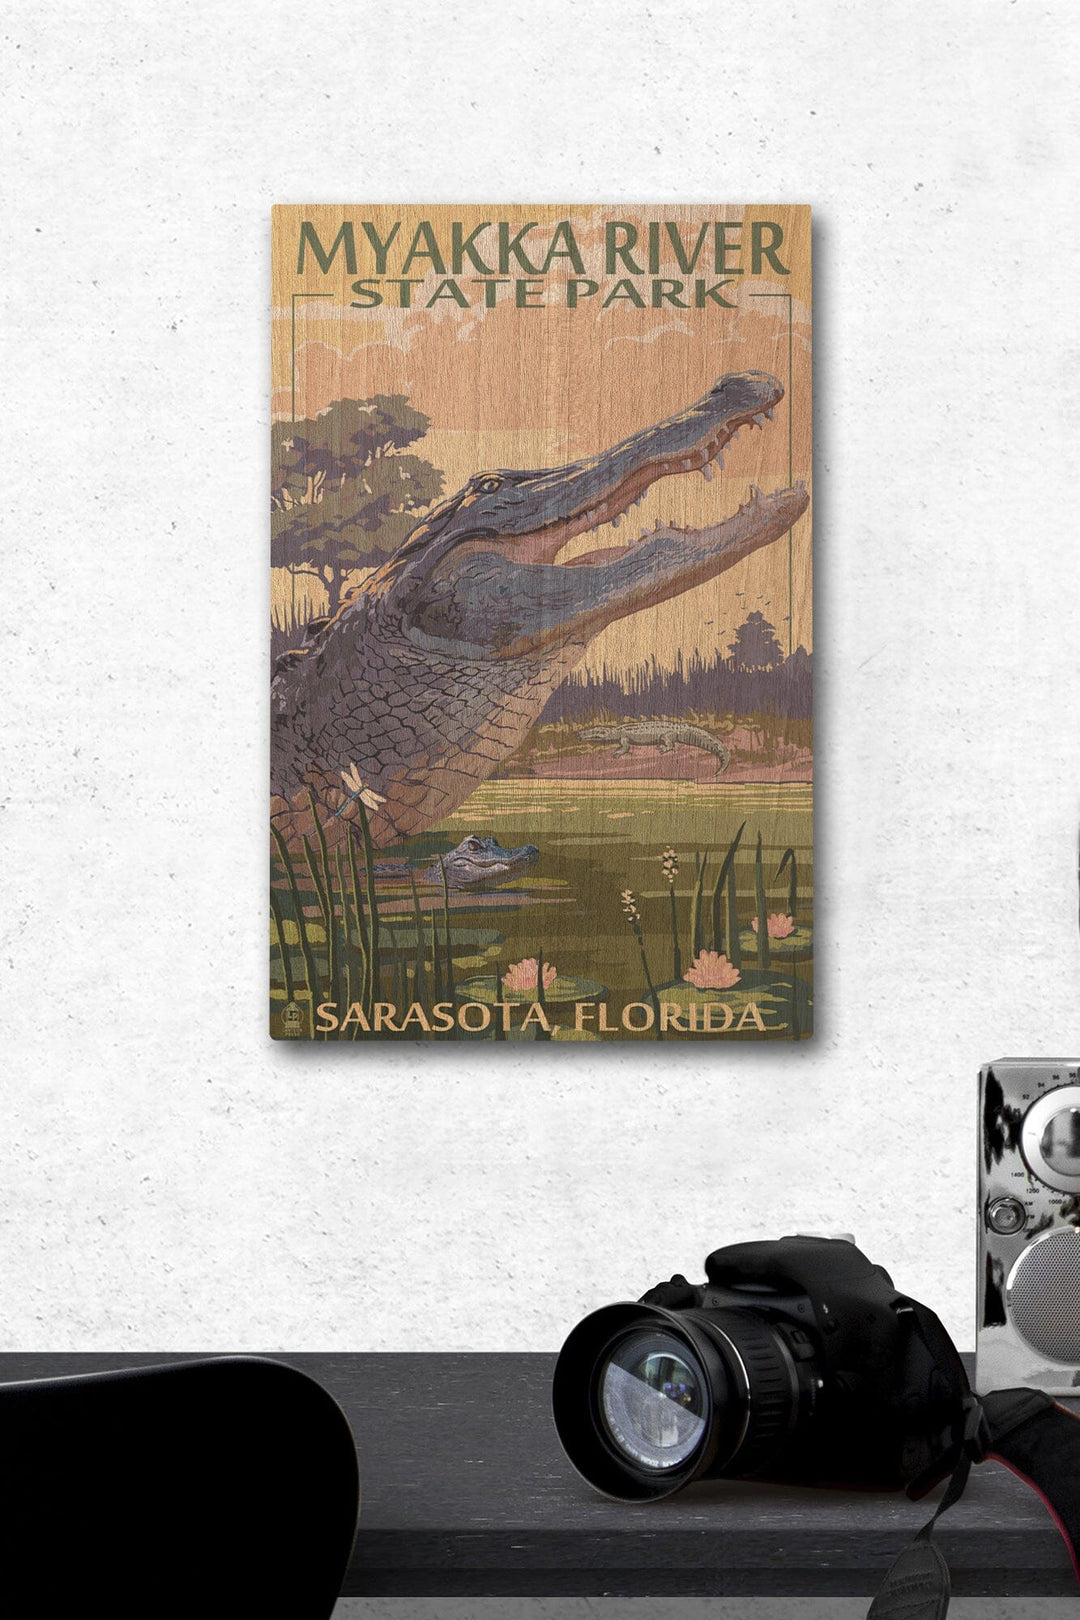 Myakka River State Park Sarasota, Florida, Alligator Scene, Lantern Press Poster, Wood Signs and Postcards Wood Lantern Press 12 x 18 Wood Gallery Print 